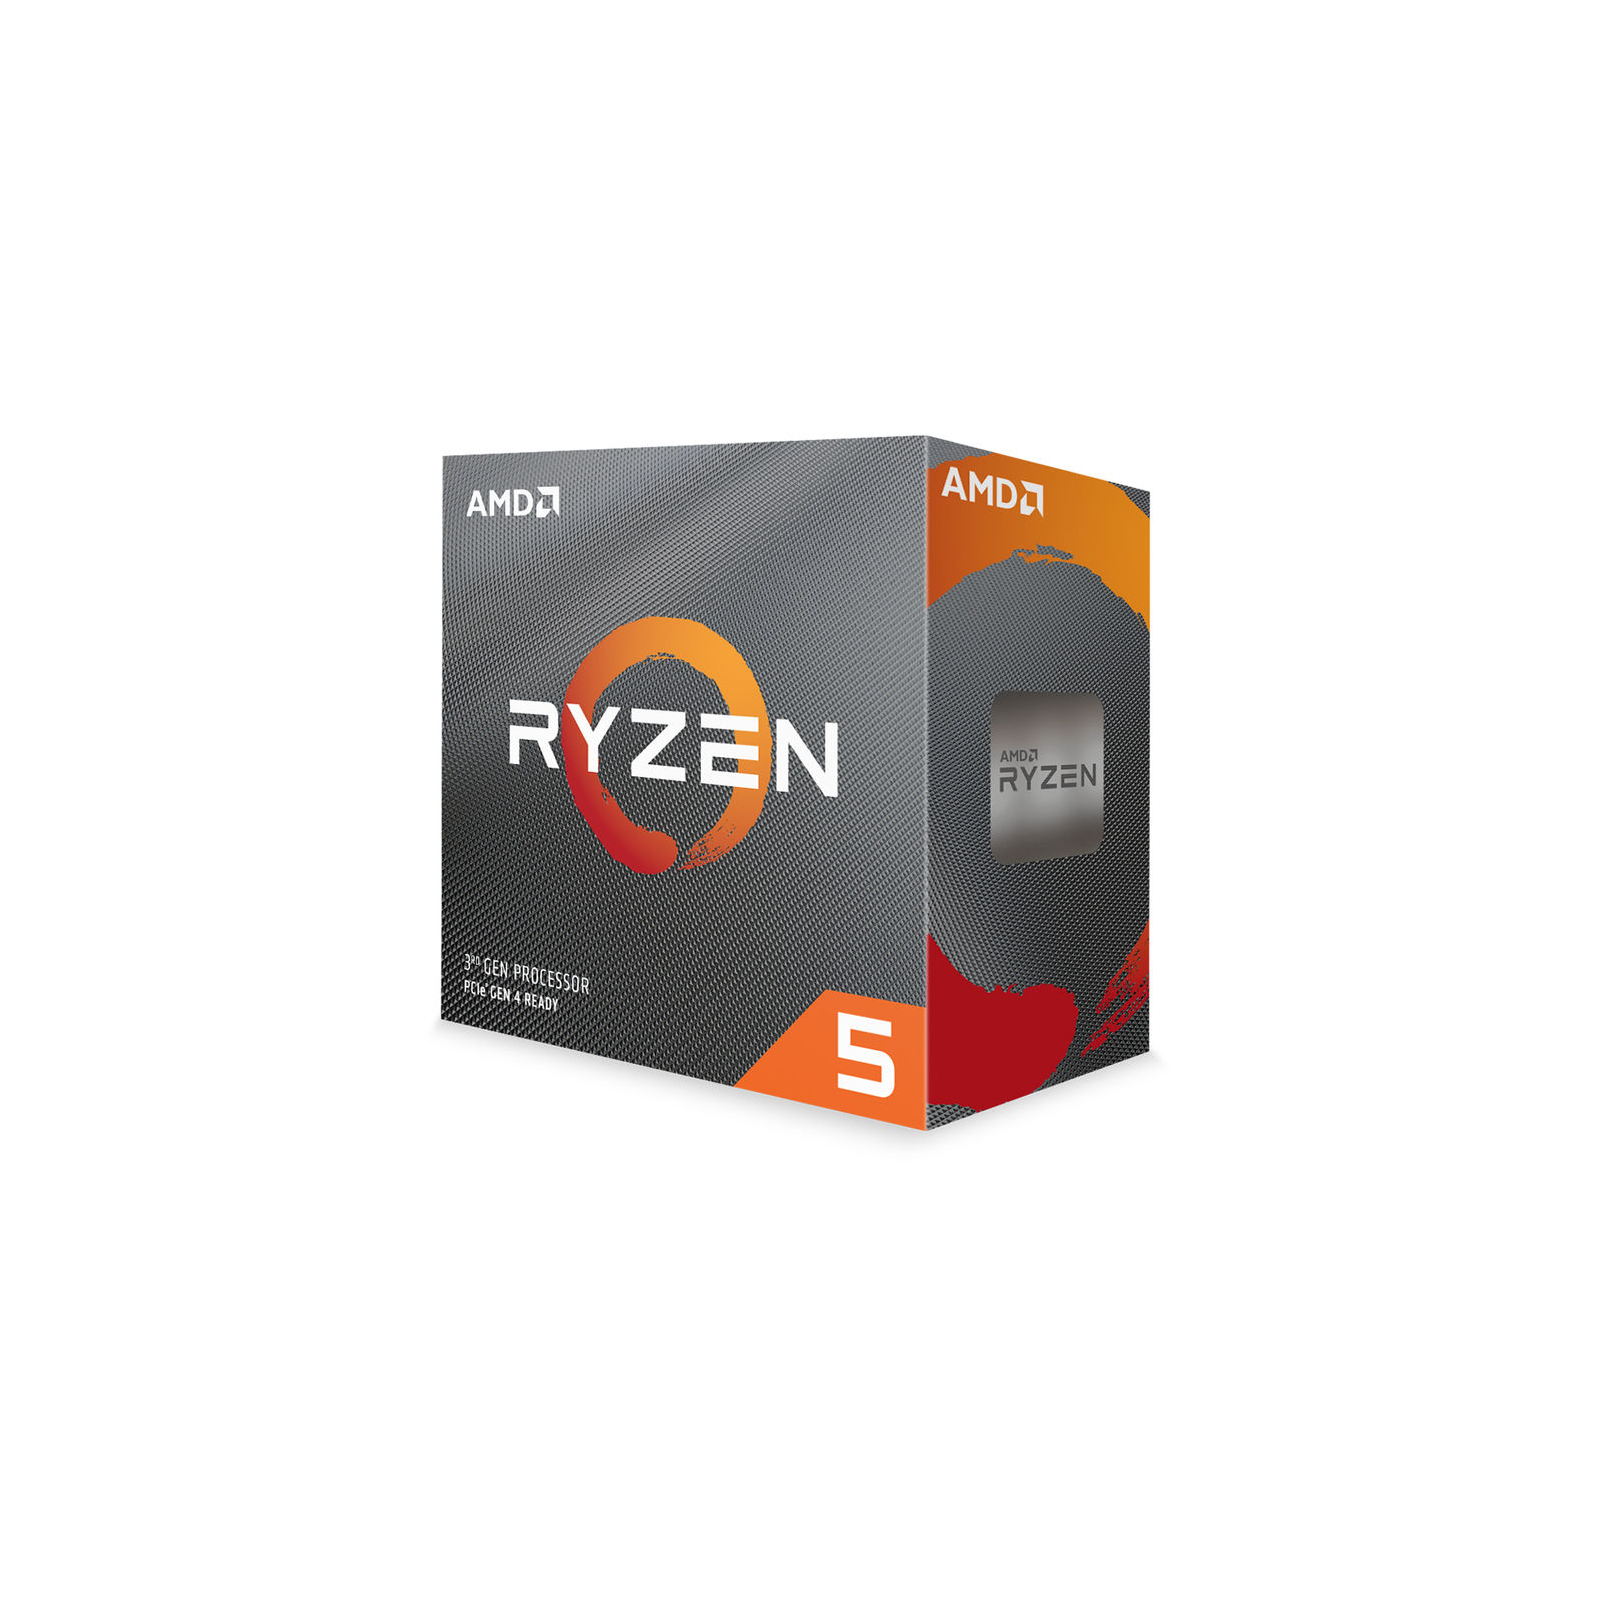 Процесор AMD Ryzen 5 3600X (100-100000022BOX)